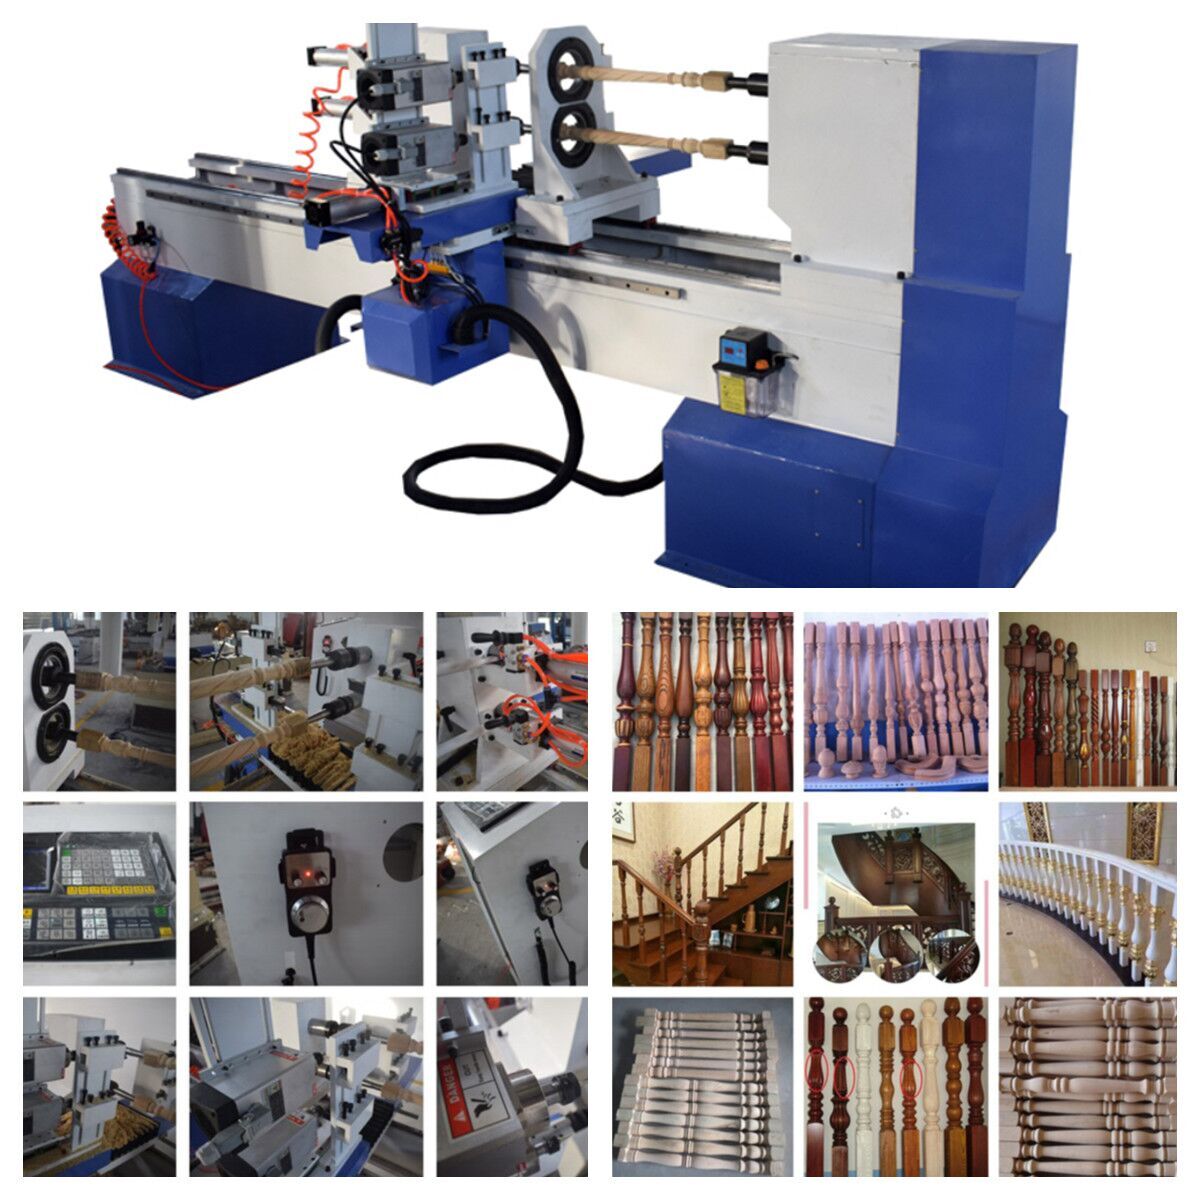 What is a CNC wood lathe machine?